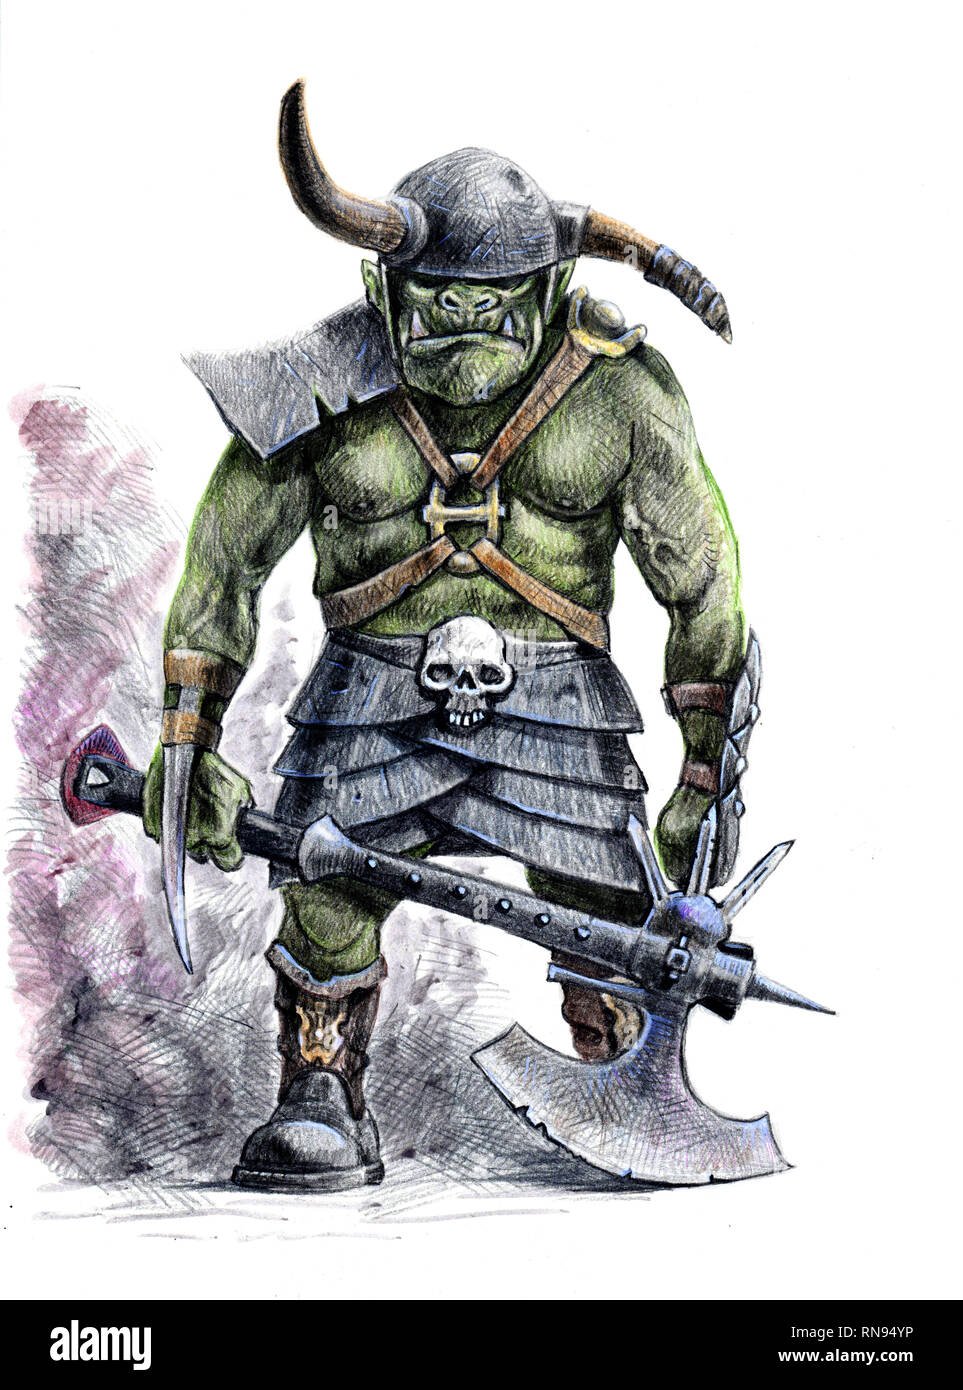 orc-warrior-fantasy-illustration-orc-with-ax-RN94YP.jpg